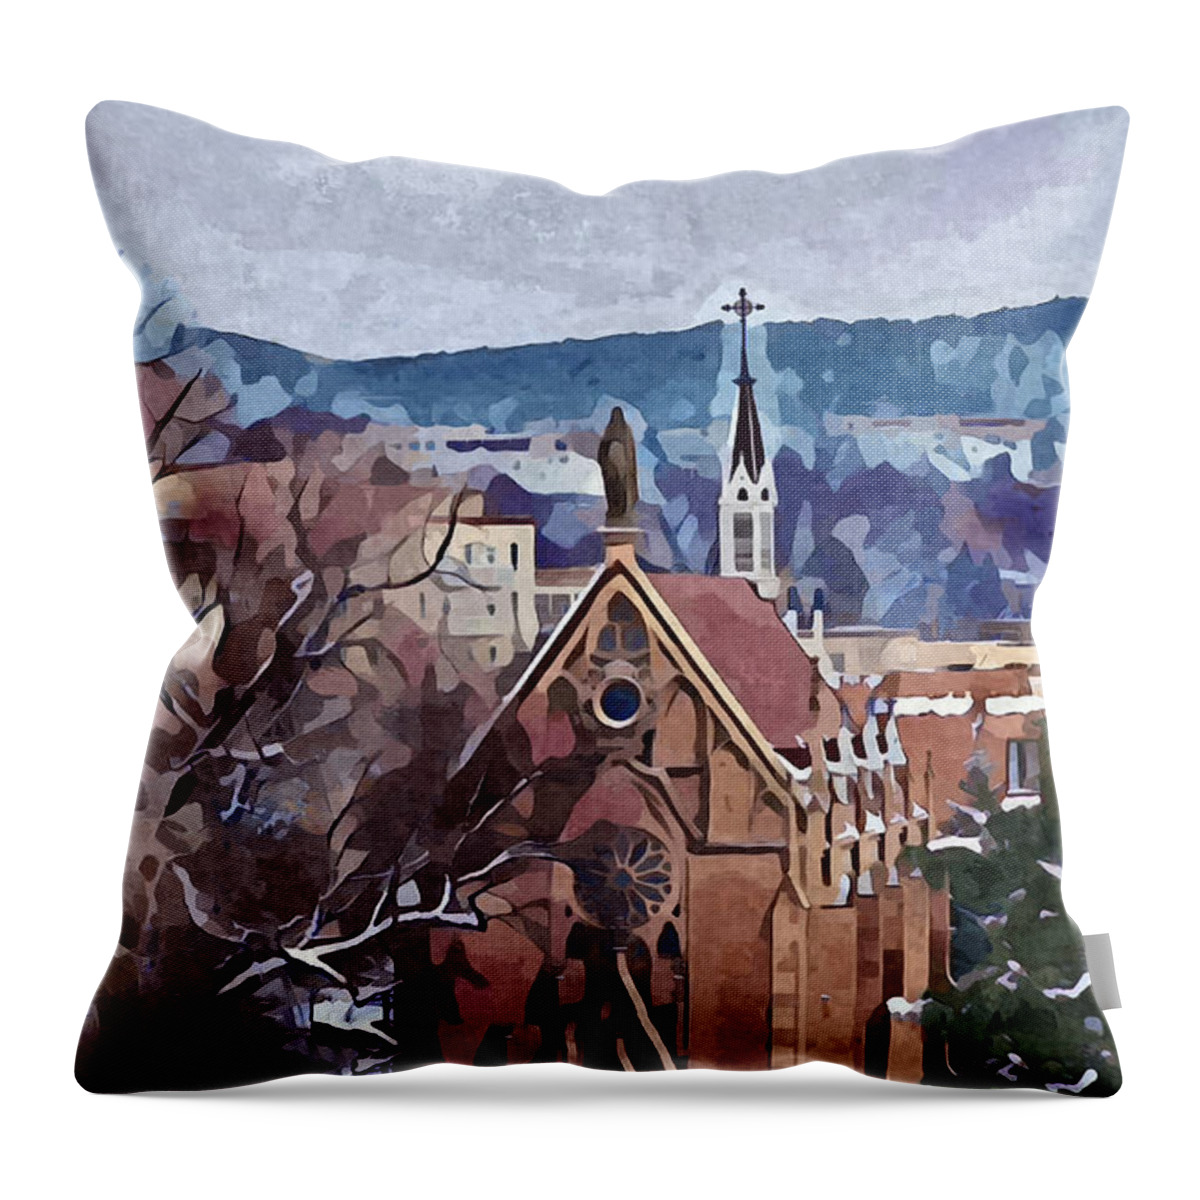 Southwest Throw Pillow featuring the digital art Santa Fe Loretto Chapel by Aerial Santa Fe